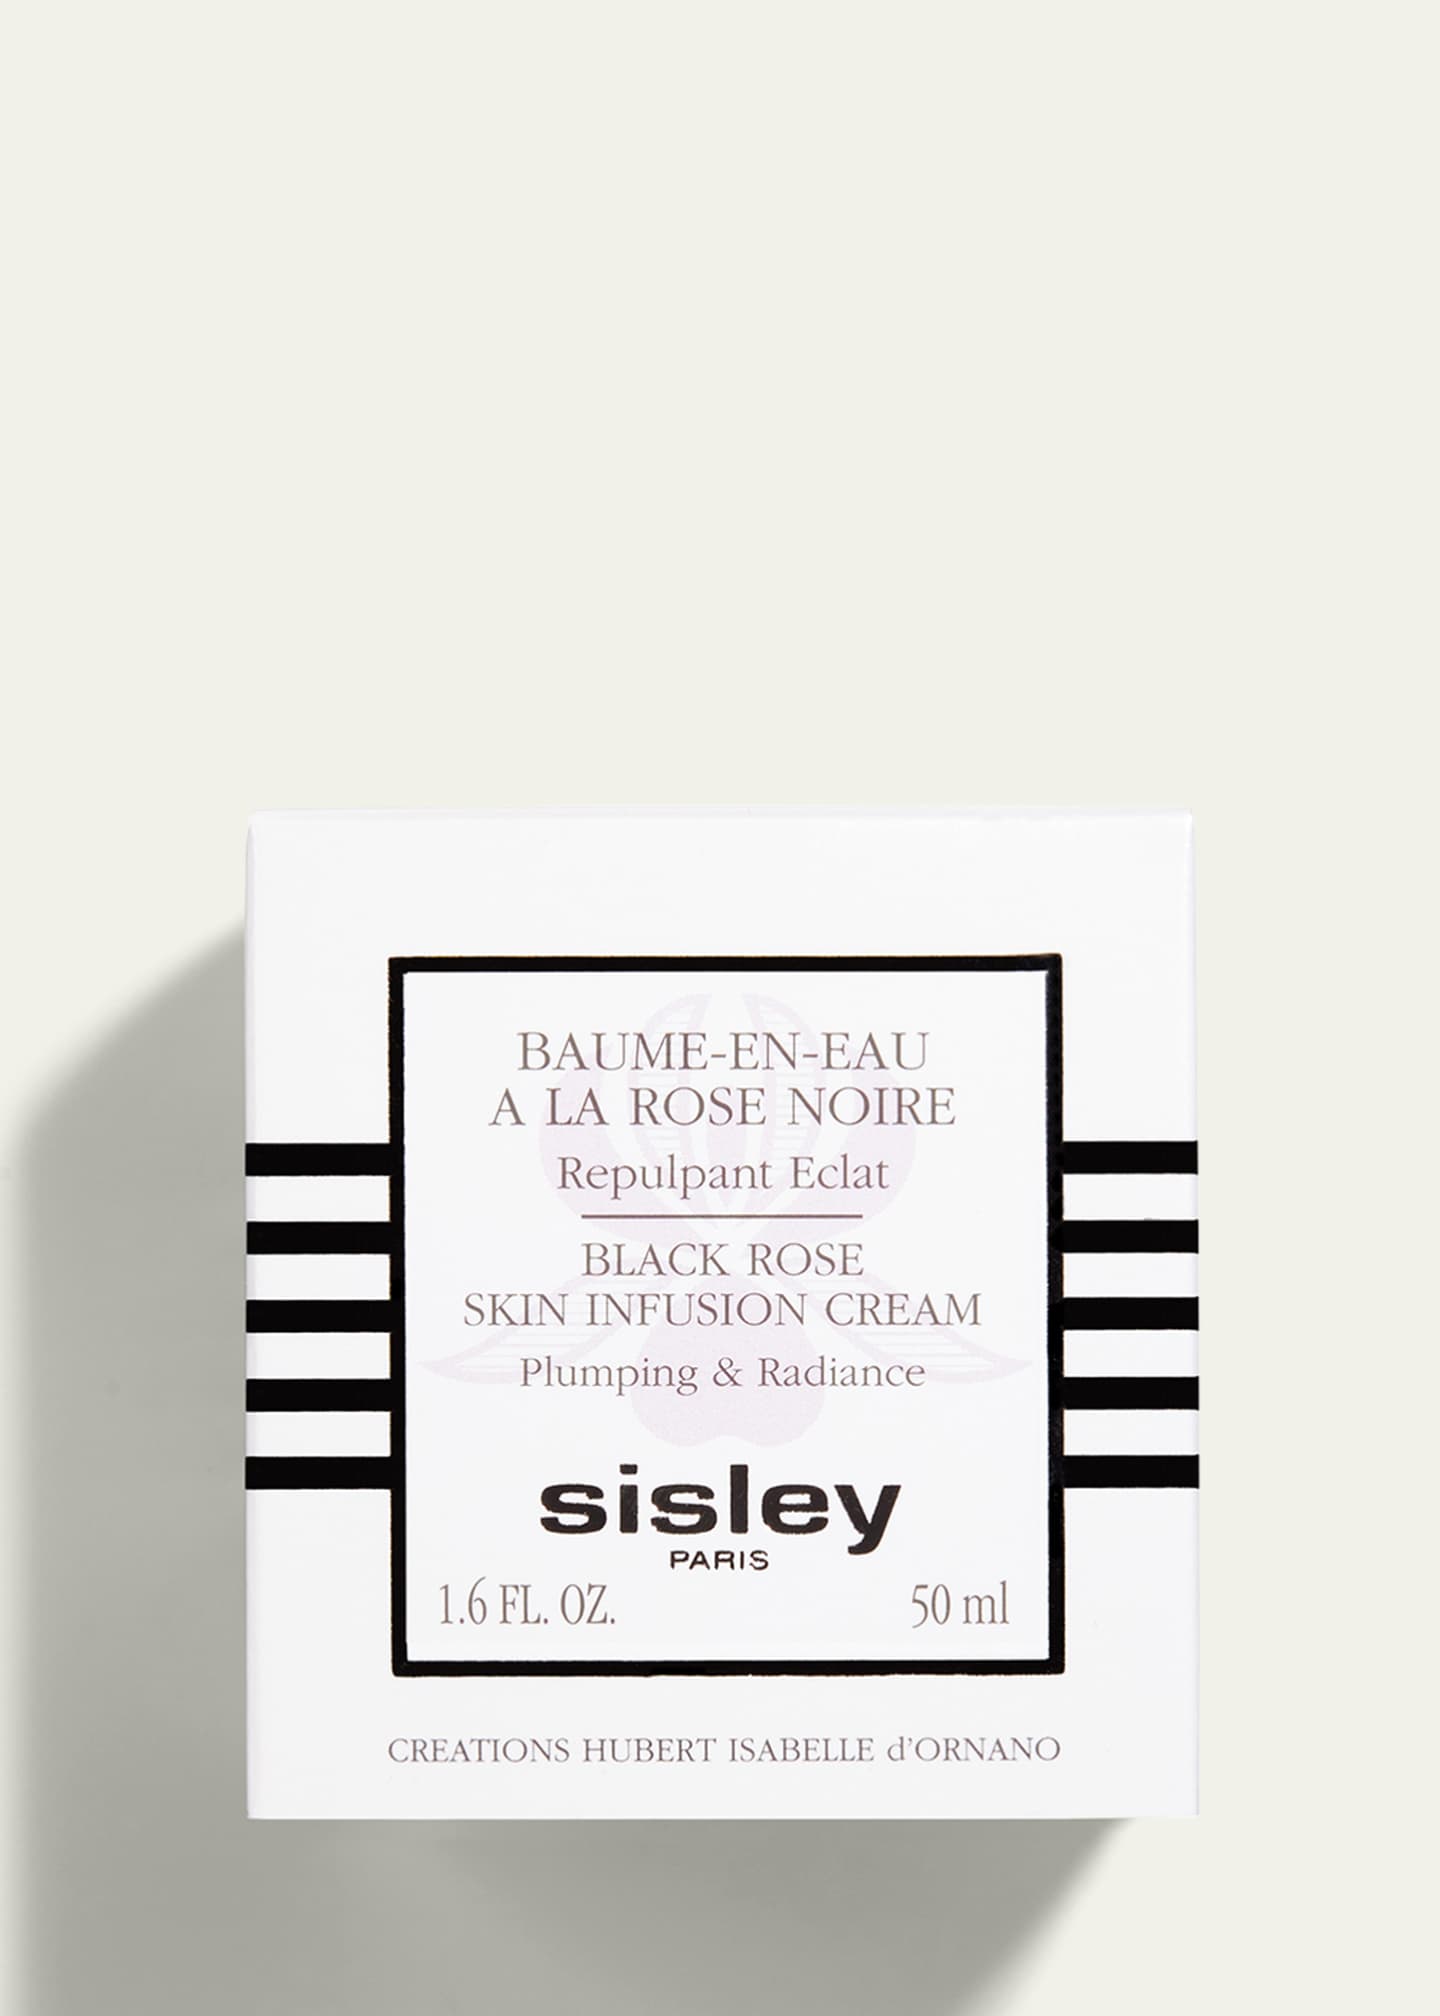 Sisley-Paris Black Rose Skin Infusion Cream Image 4 of 4